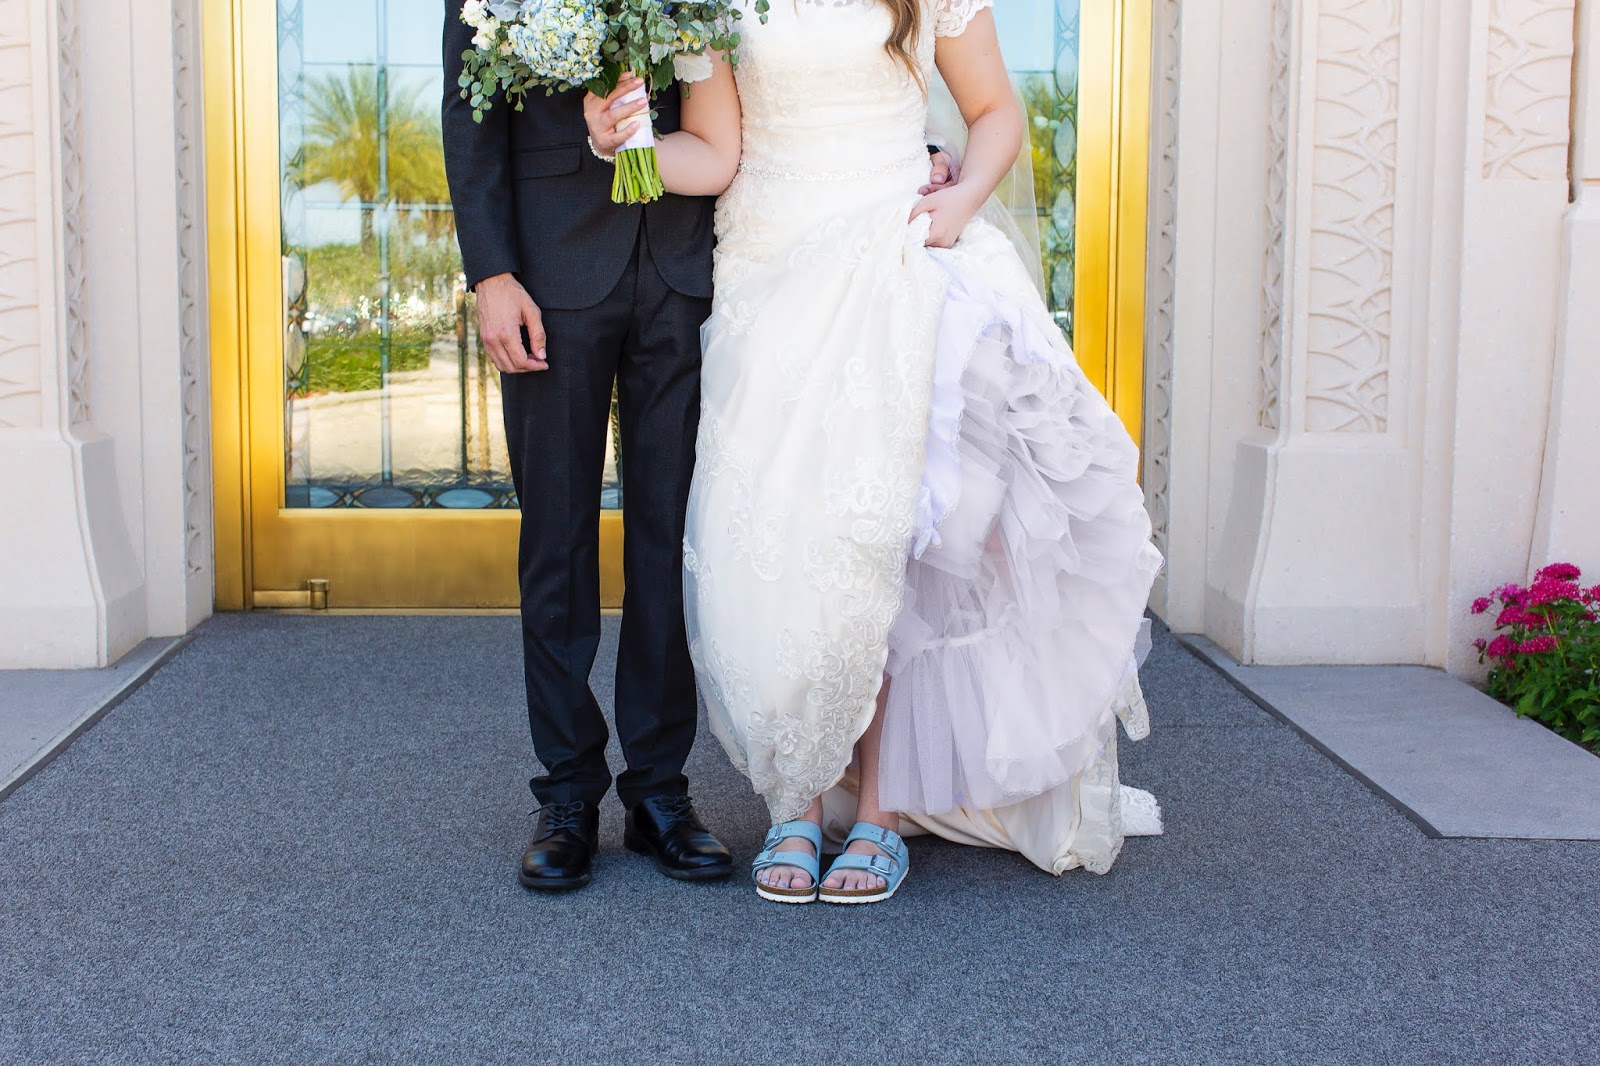 birkenstocks with wedding dress